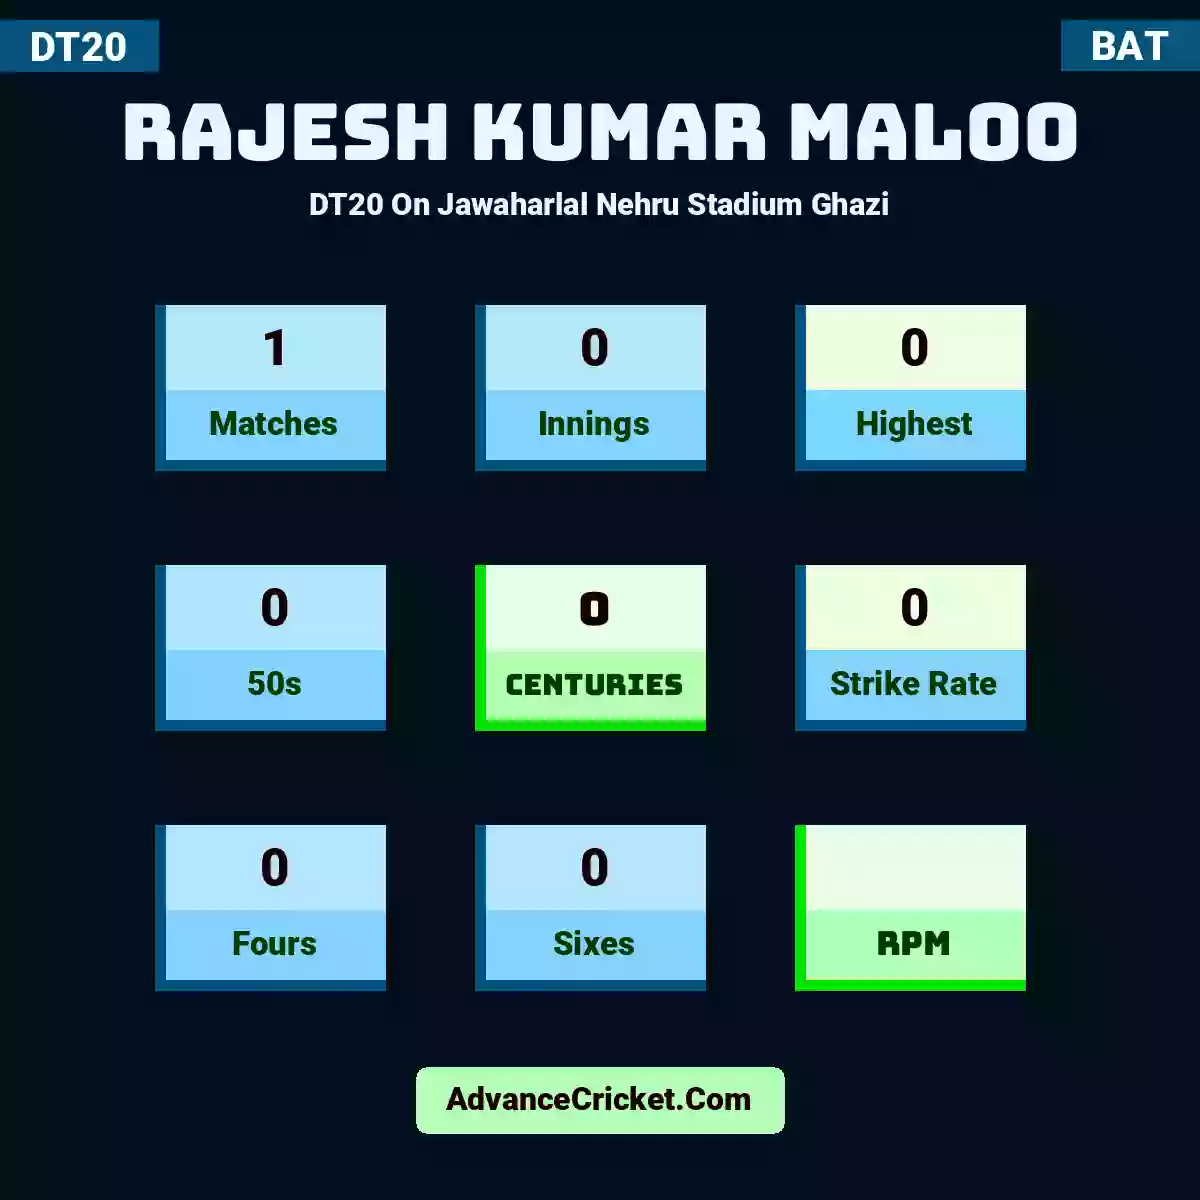 Rajesh Kumar Maloo DT20  On Jawaharlal Nehru Stadium Ghazi, Rajesh Kumar Maloo played 1 matches, scored 0 runs as highest, 0 half-centuries, and 0 centuries, with a strike rate of 0. R.Kumar.Maloo hit 0 fours and 0 sixes.